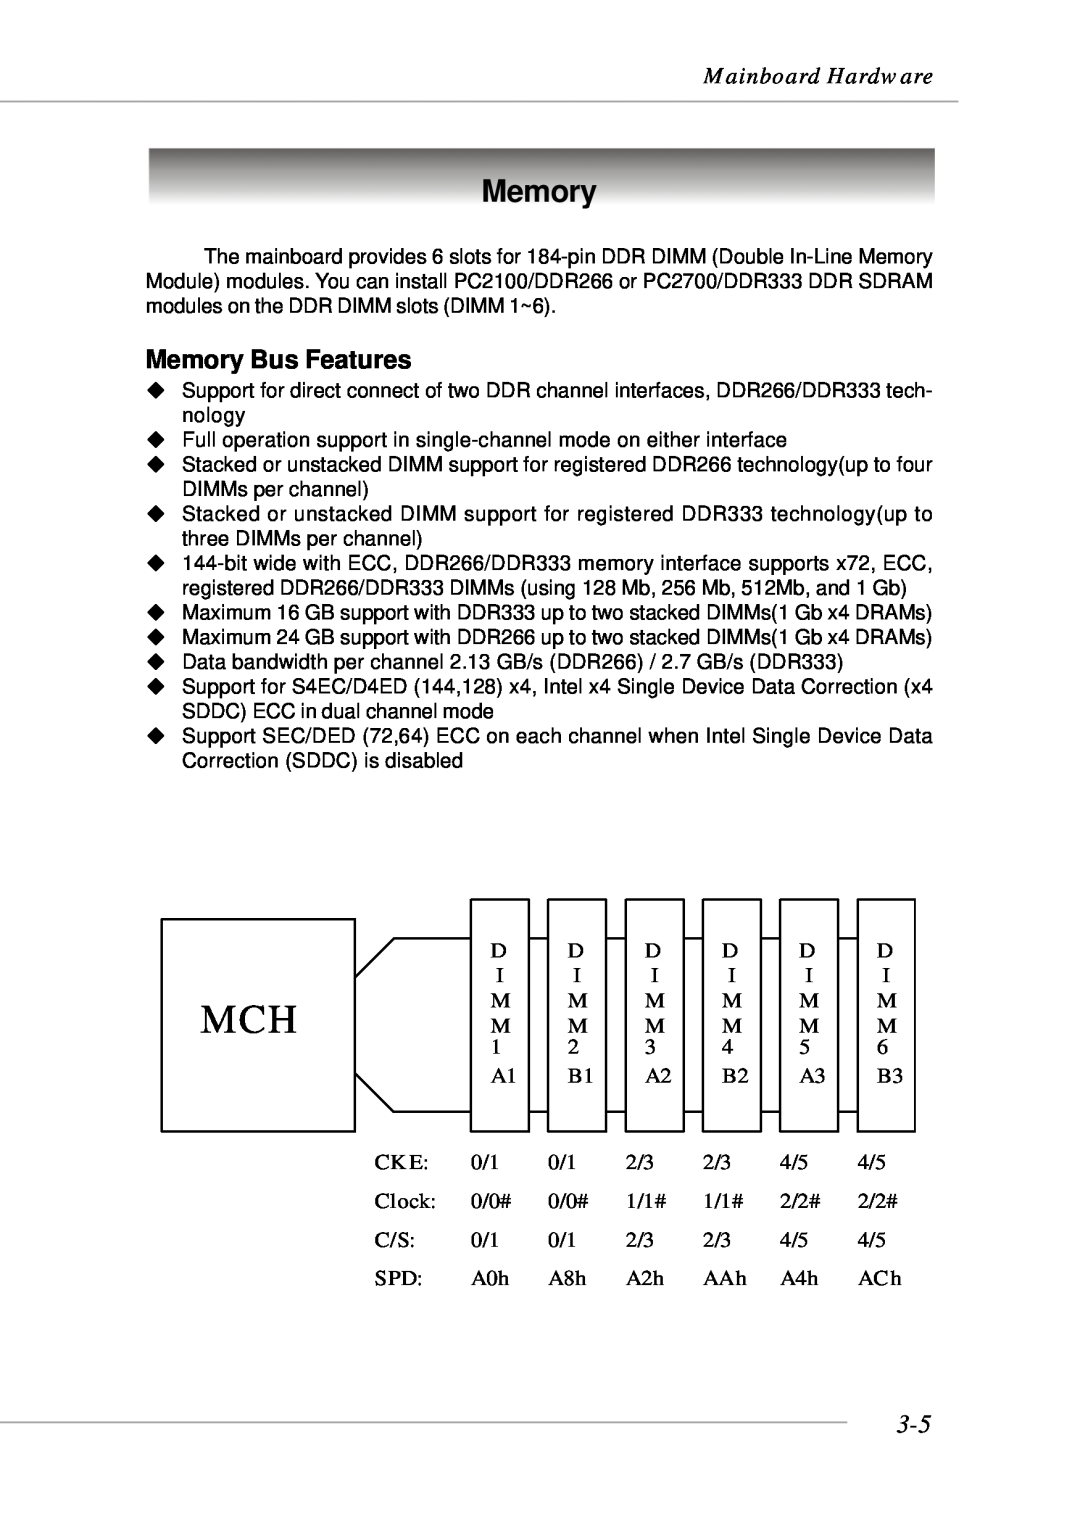 MSI MS-9246 Memory, Mainboard Hardware, D I M M A1 CKE 0/1, D I M M B1 0/1, D I M M A2 2/3, D I M M B2 2/3, D I M M A3 4/5 